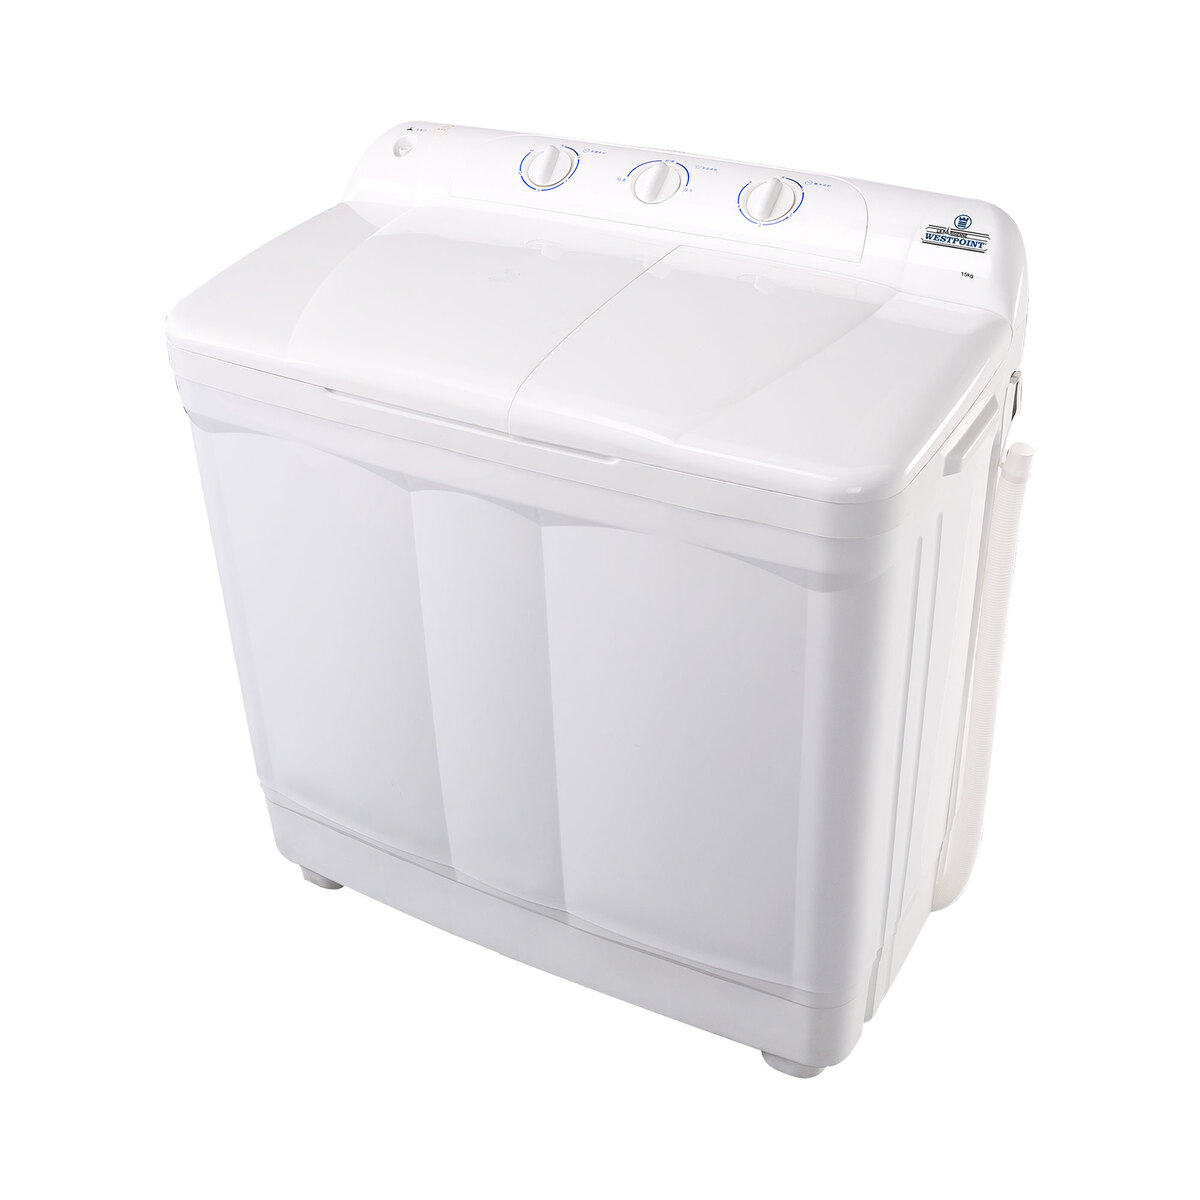 Westpoint Semi Automatic Washing Machine WTF1522 15Kg